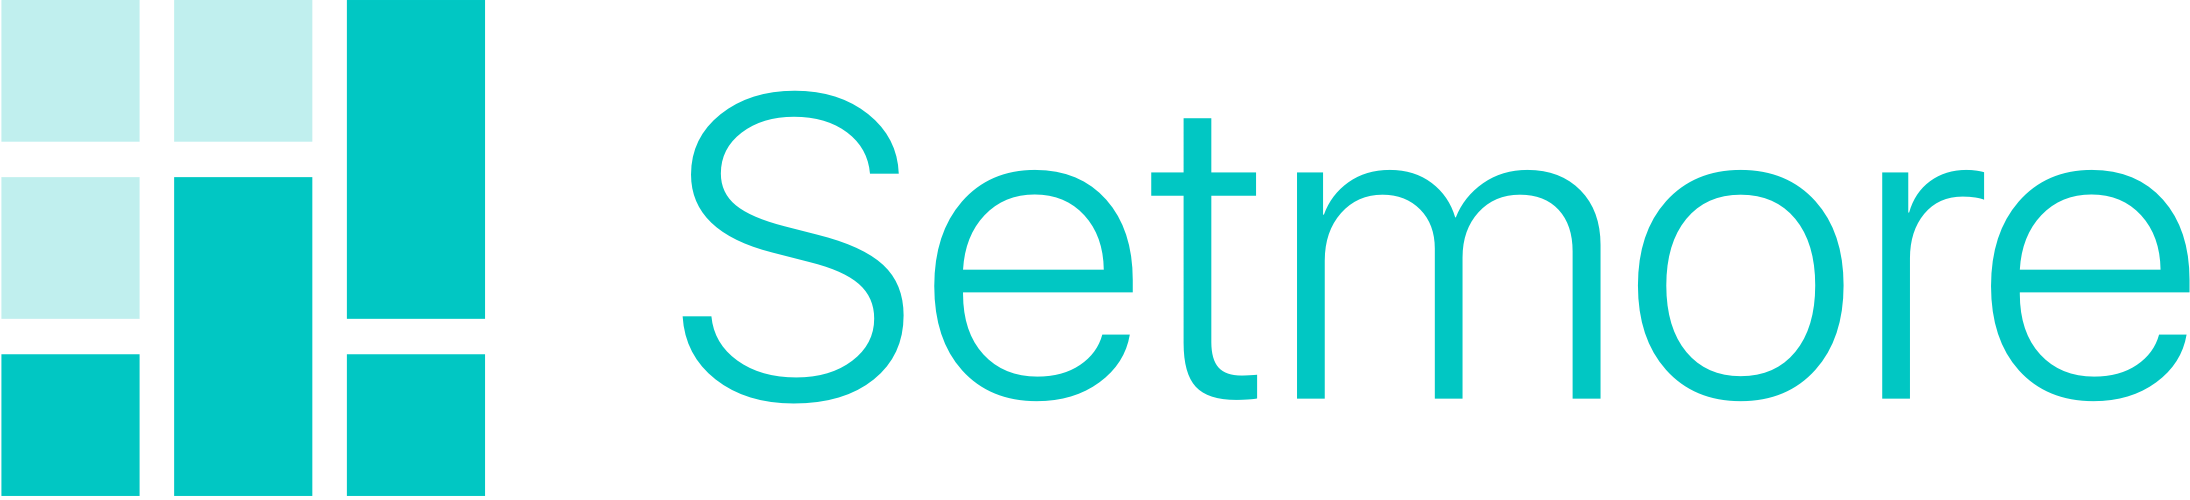 Setmore-Logo-GREEN.png